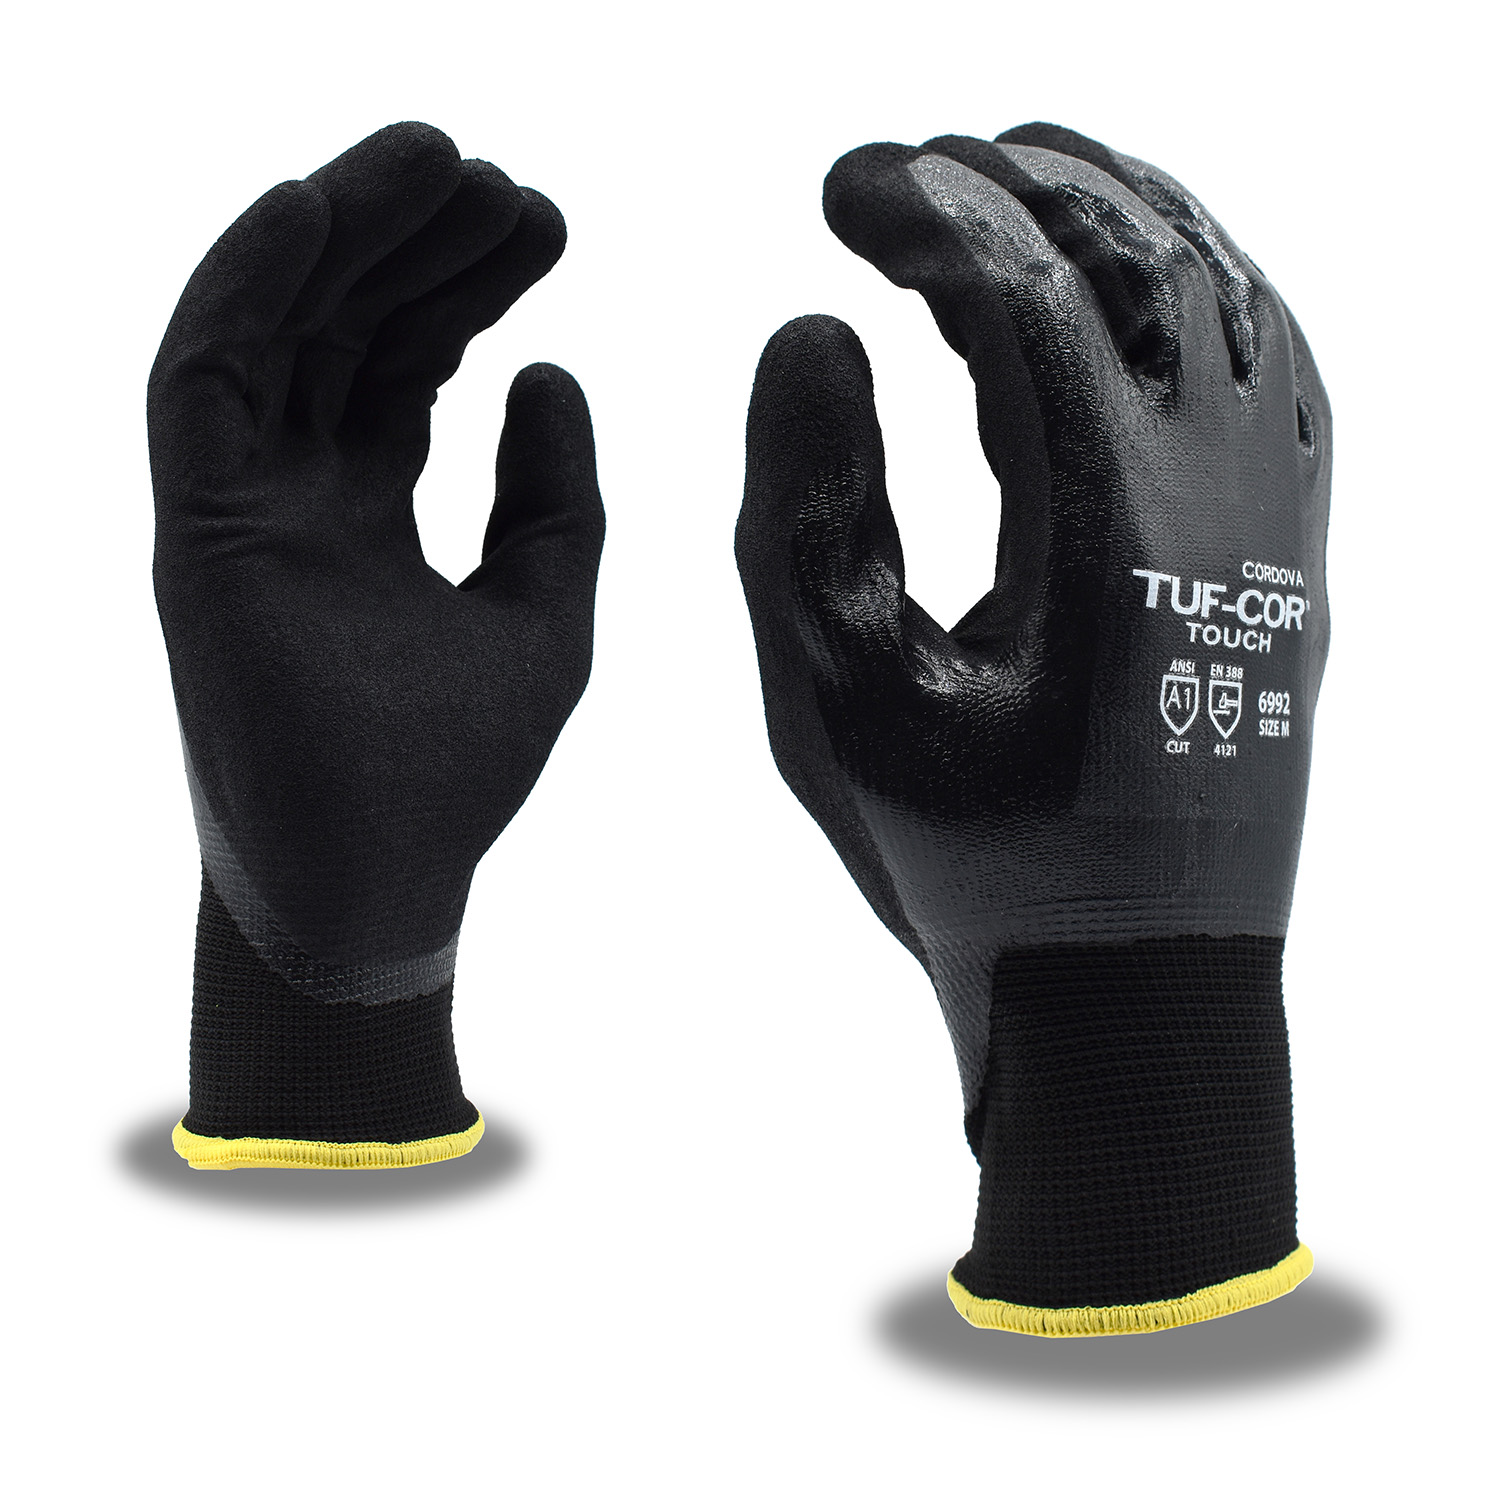 Cordova Tuf-Cor Touch™ Gloves - Spill Control